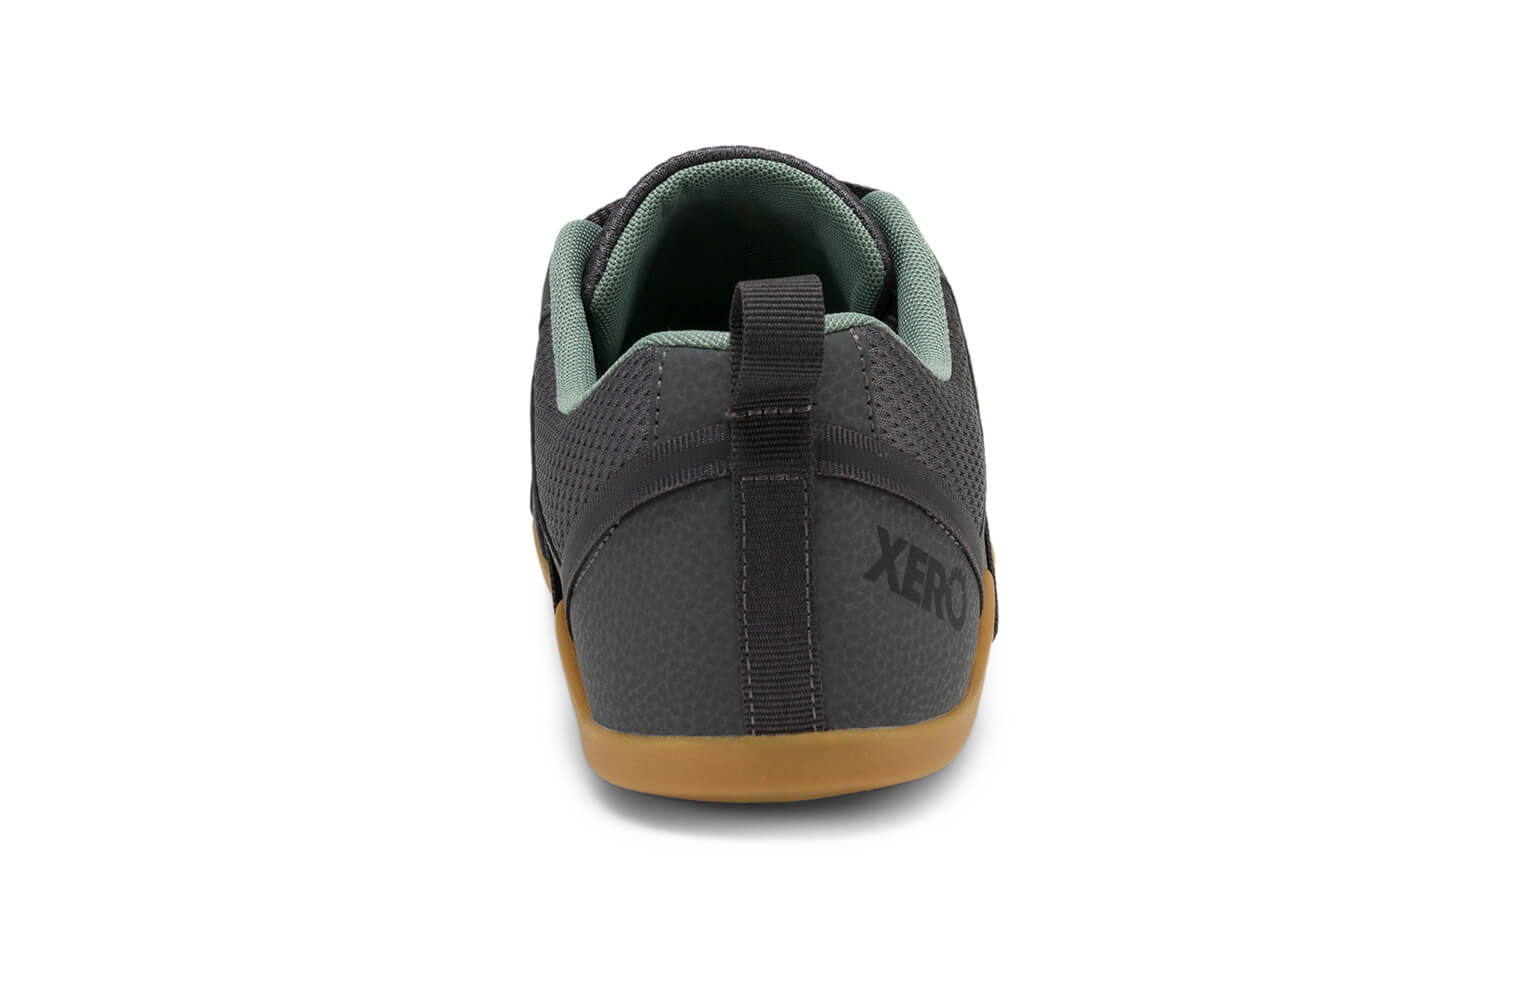 Xero Shoes Prio Shoe Review (Minimalist)